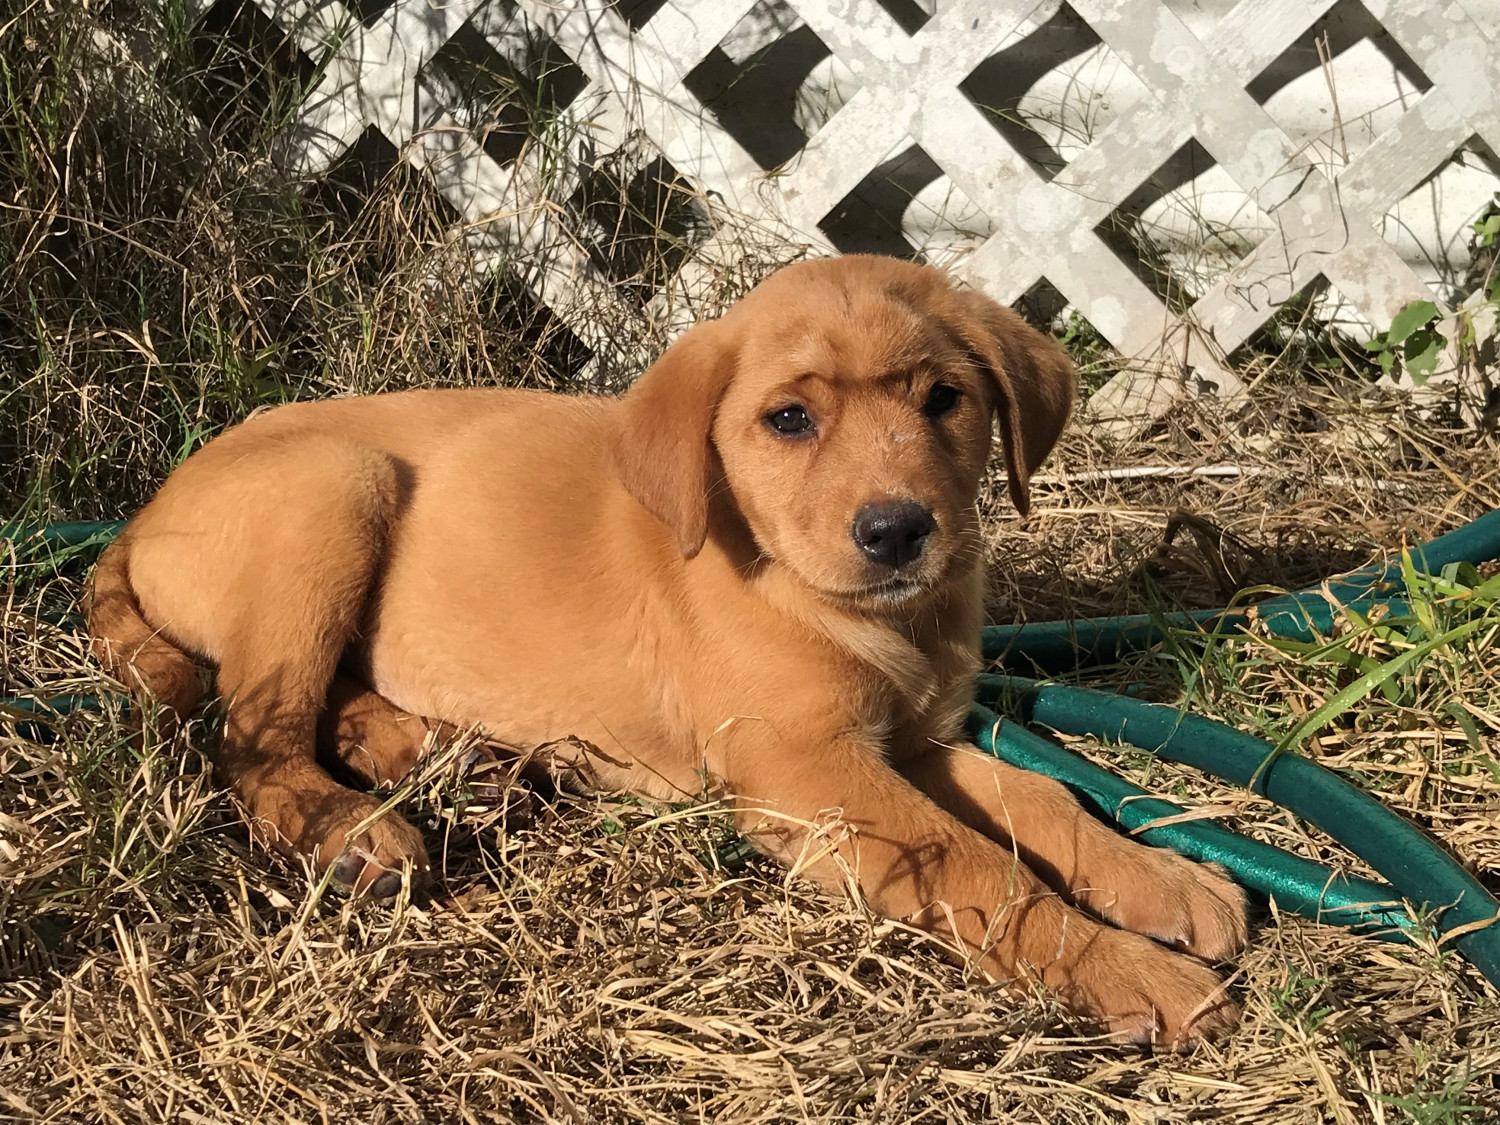 Goldador Puppies For Sale Houston, TX 283973 Petzlover